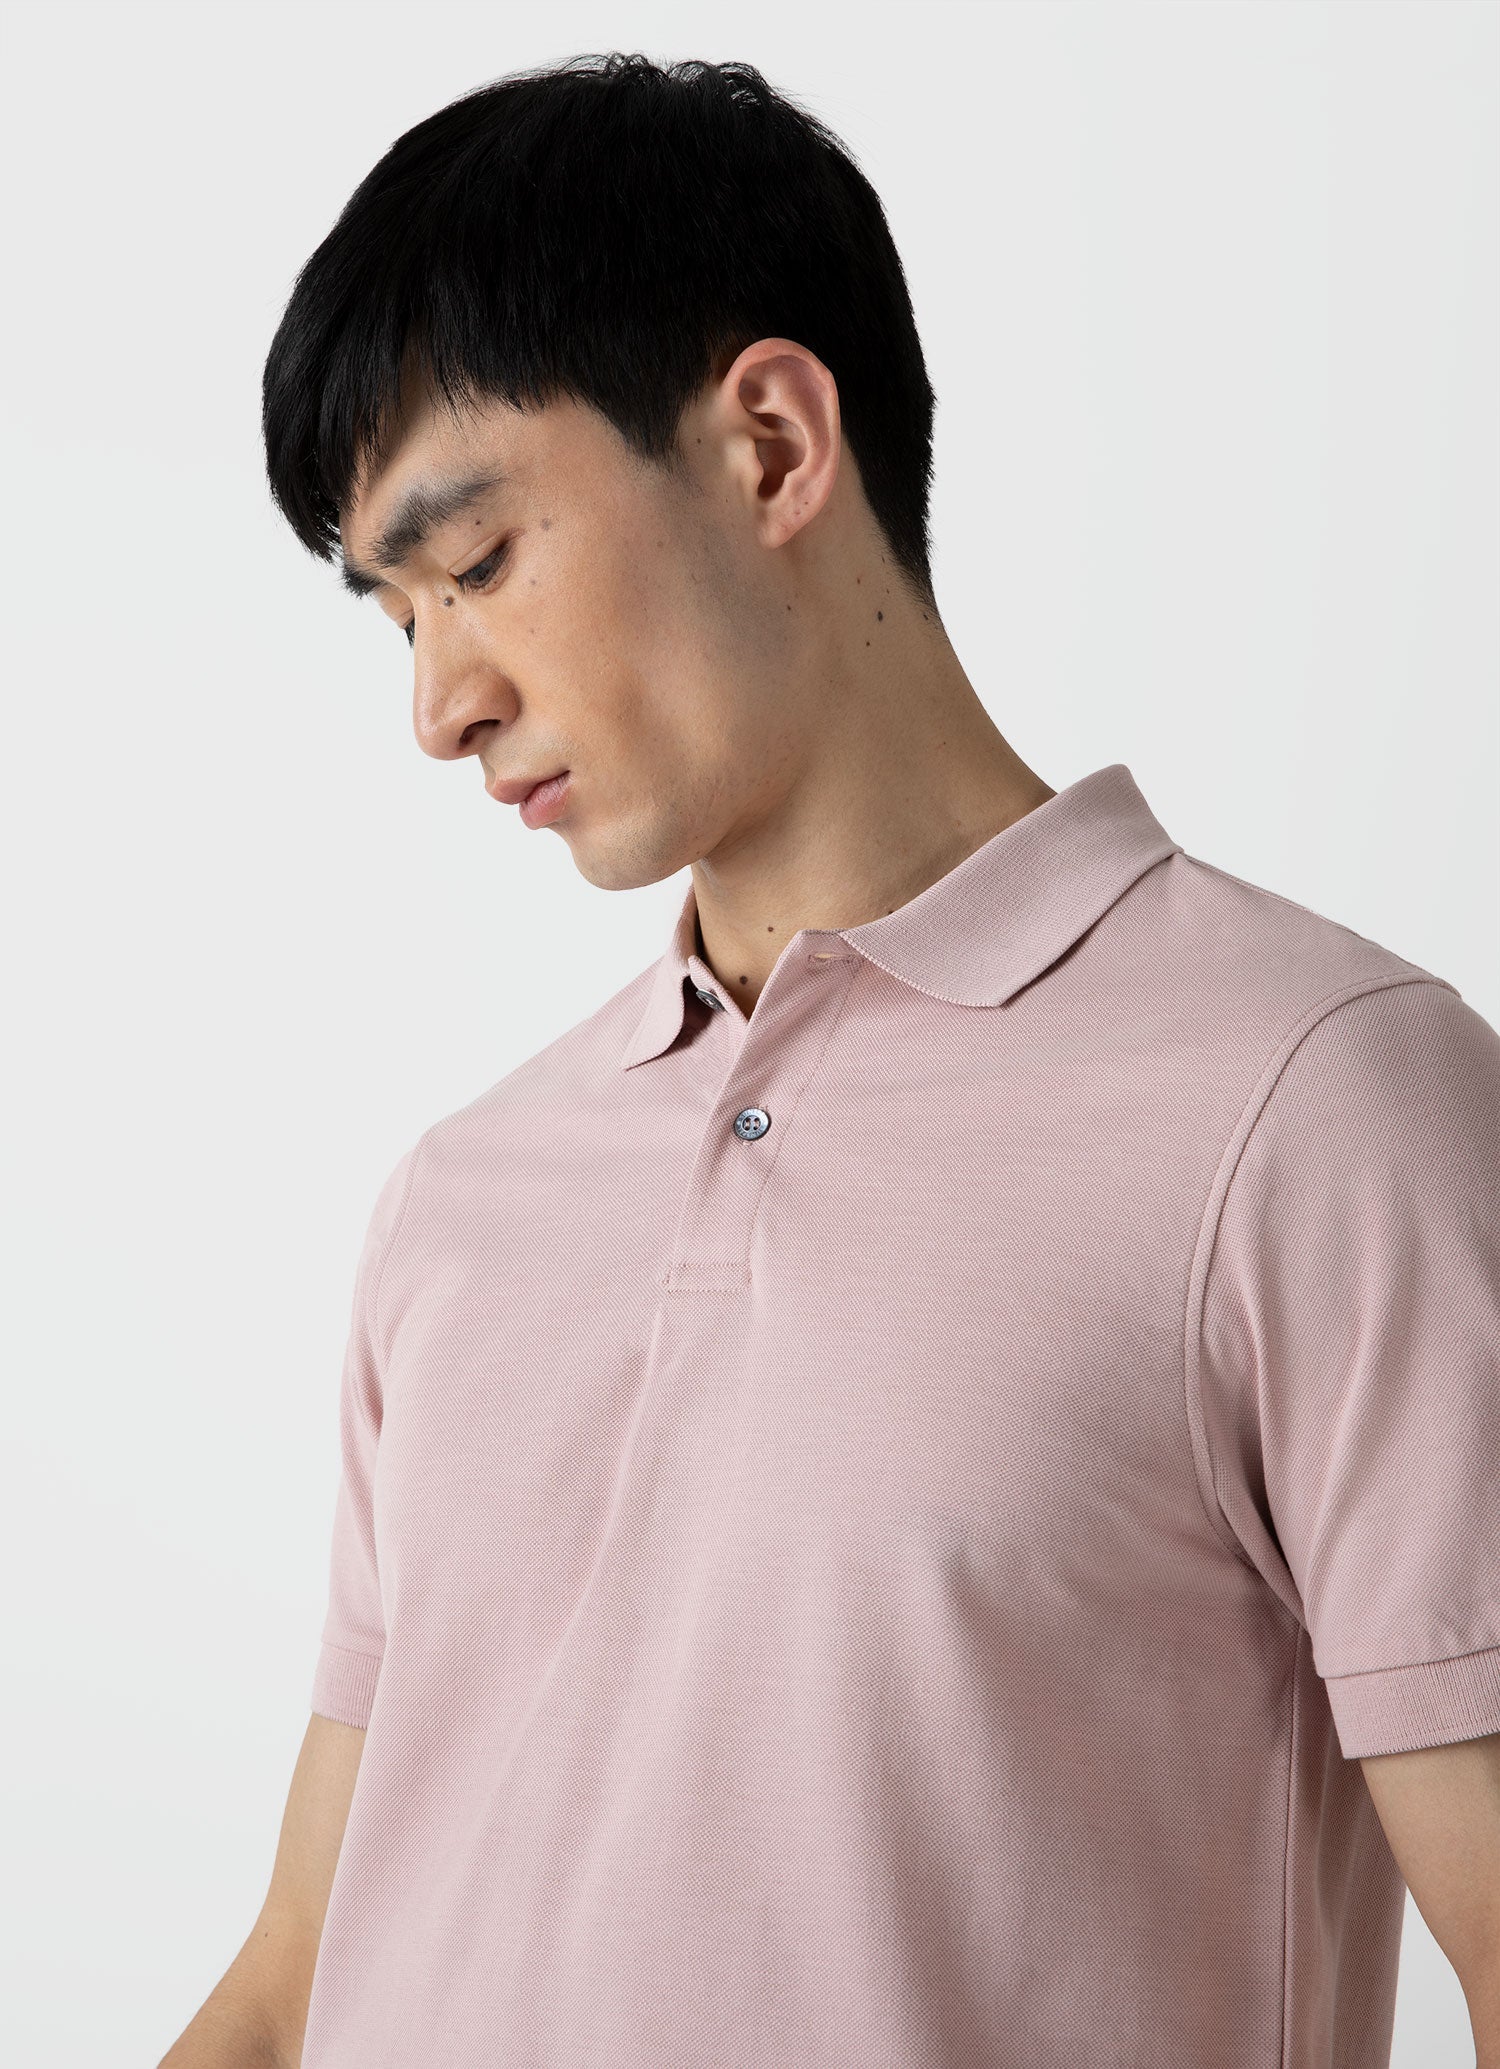 Men's Piqué Polo Shirt in Shell Pink